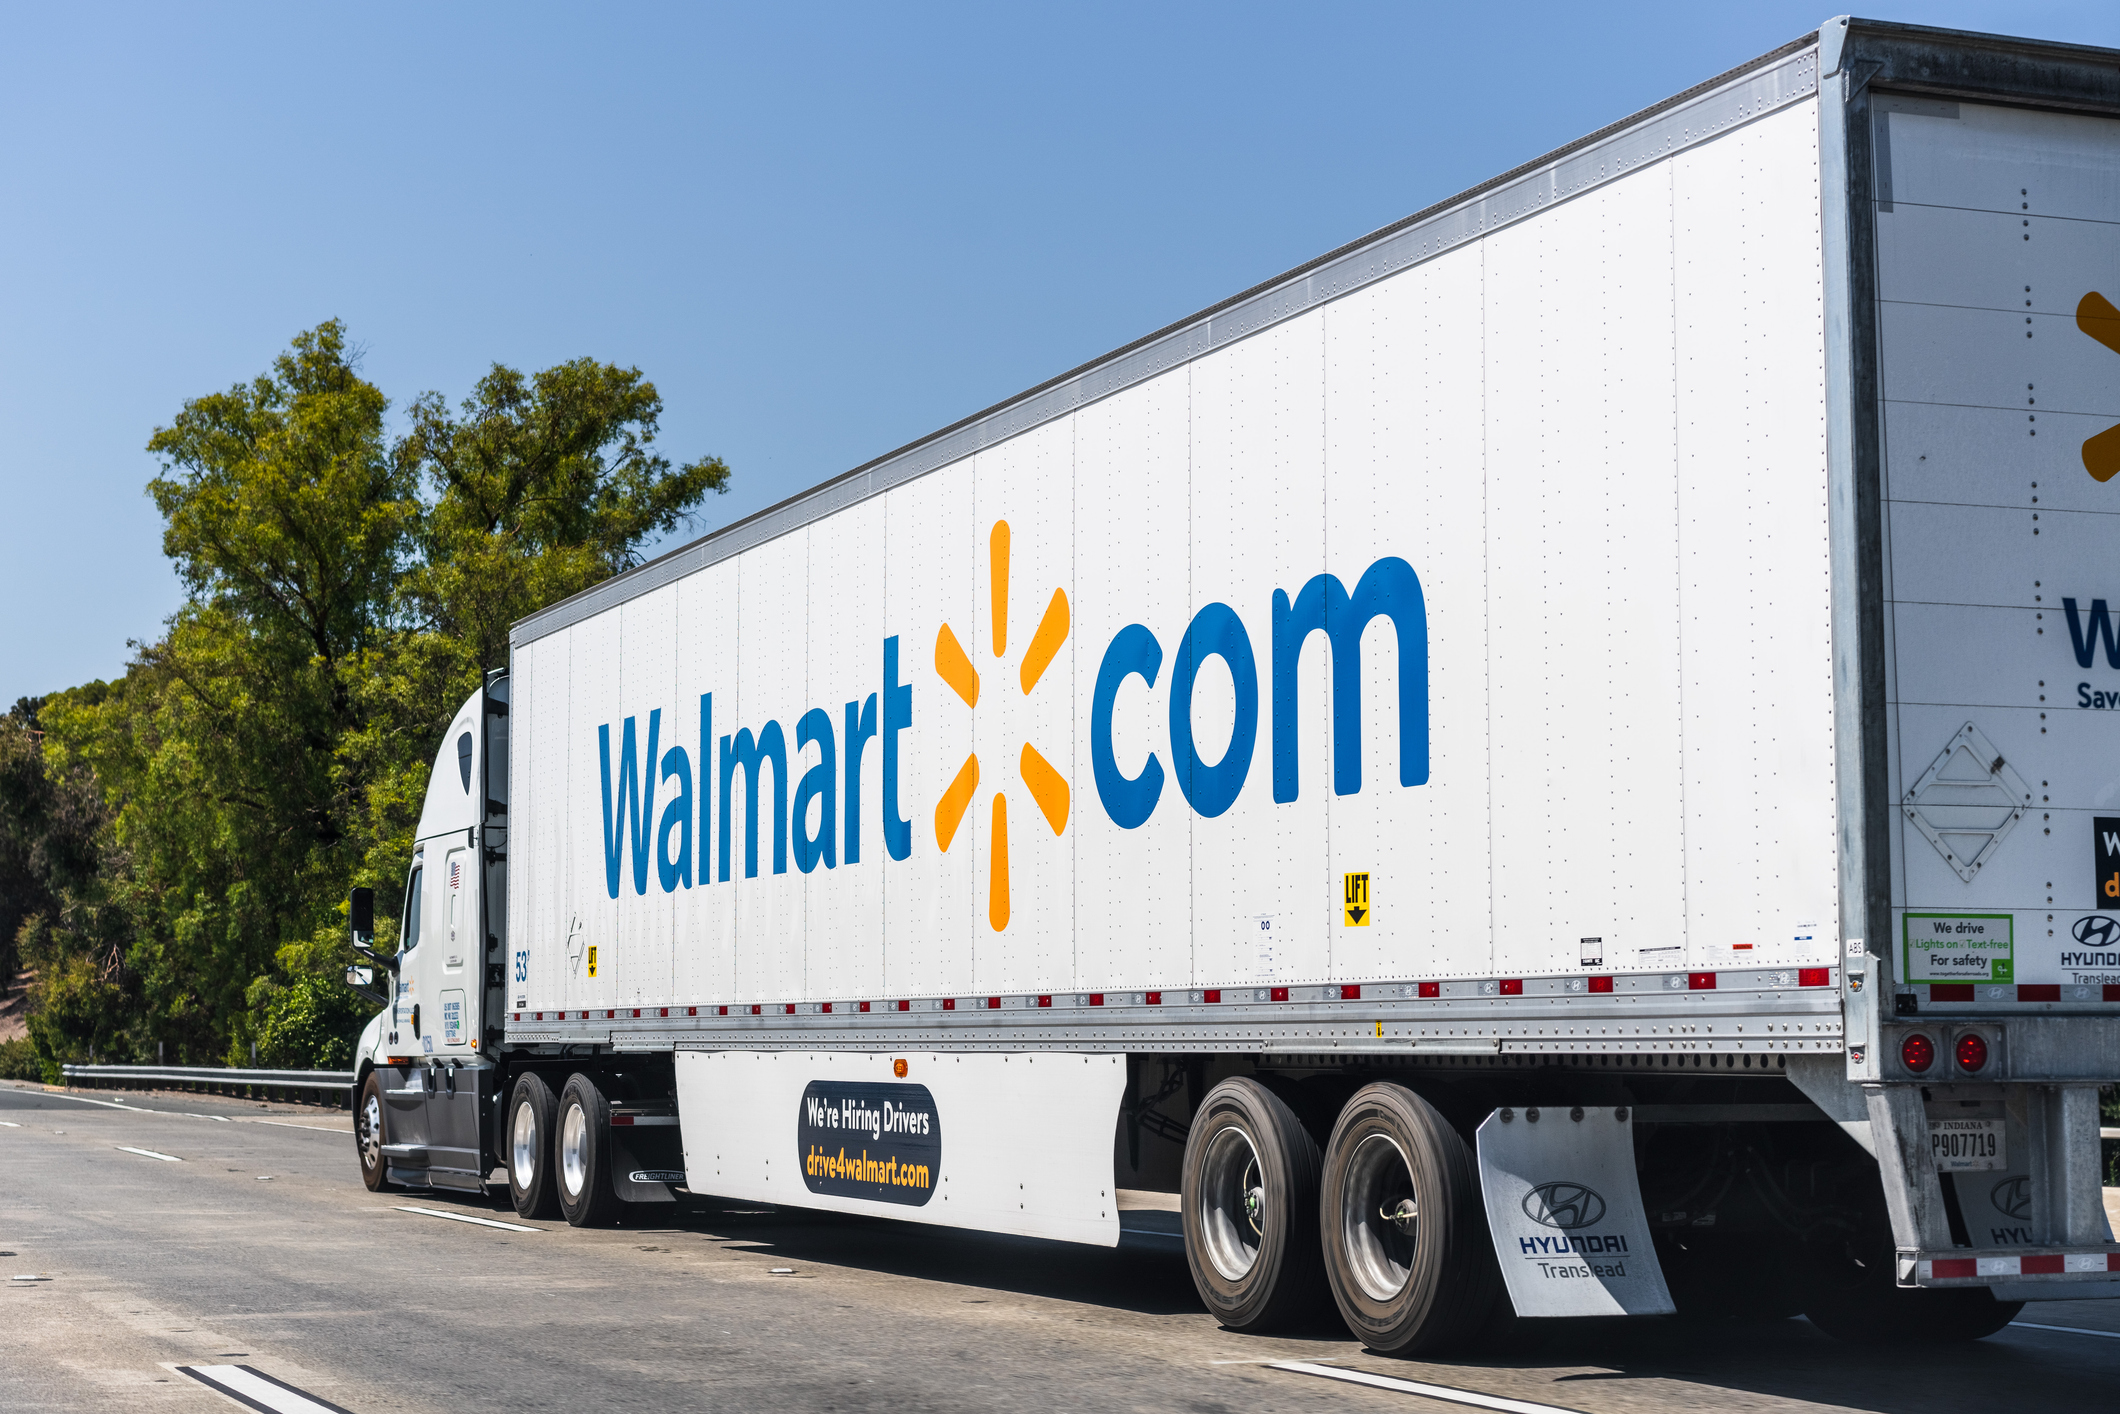 Walmart truck driving on the freeway